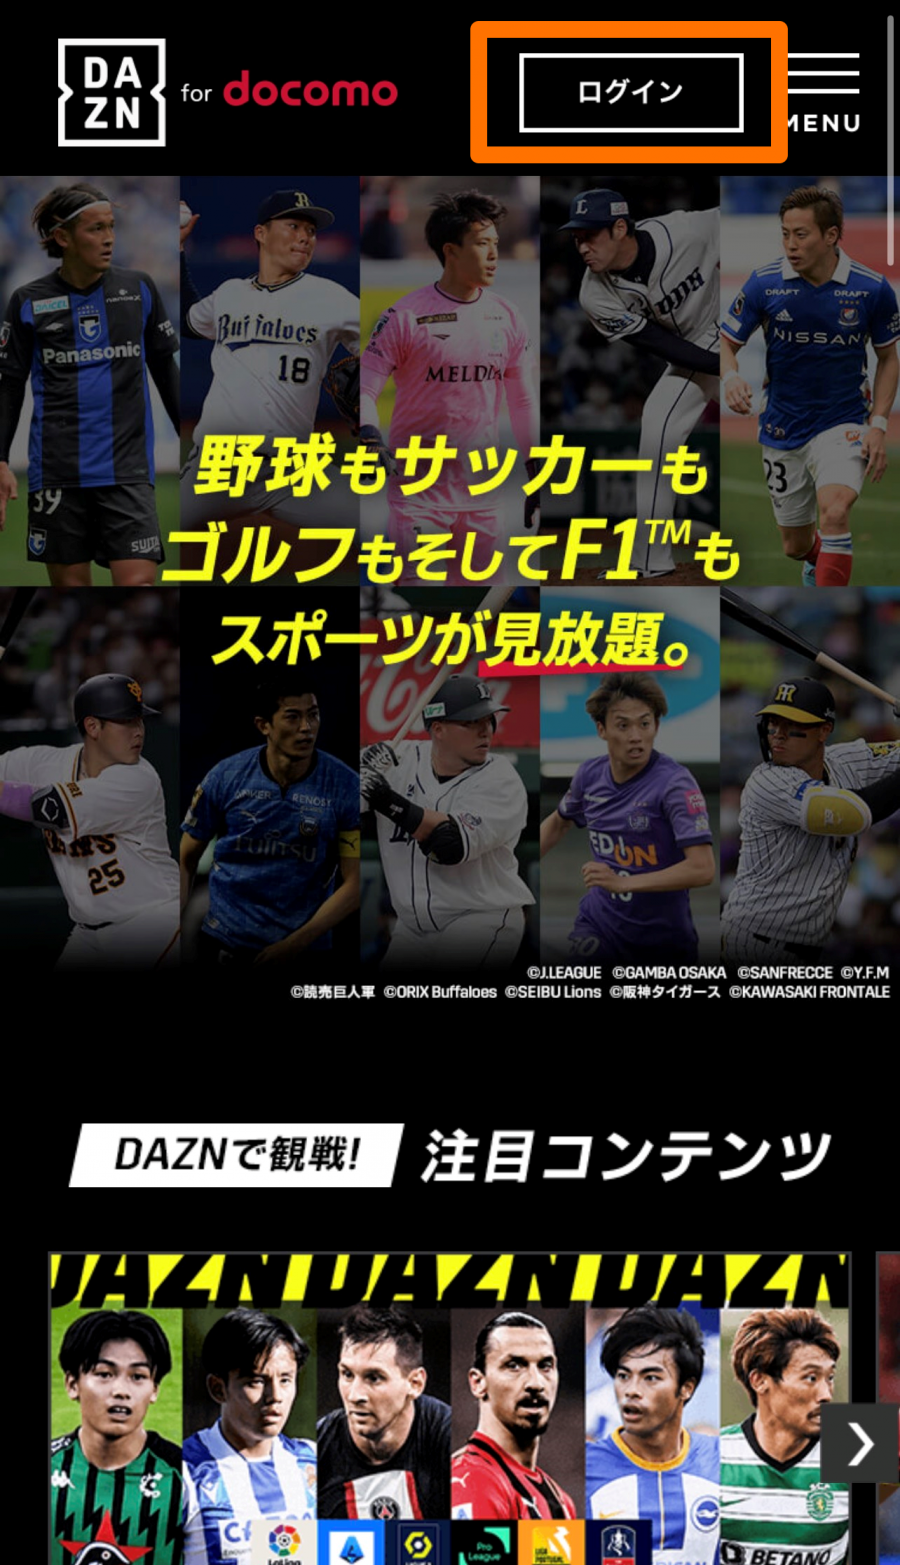 DAZN for docomo・公式サイト